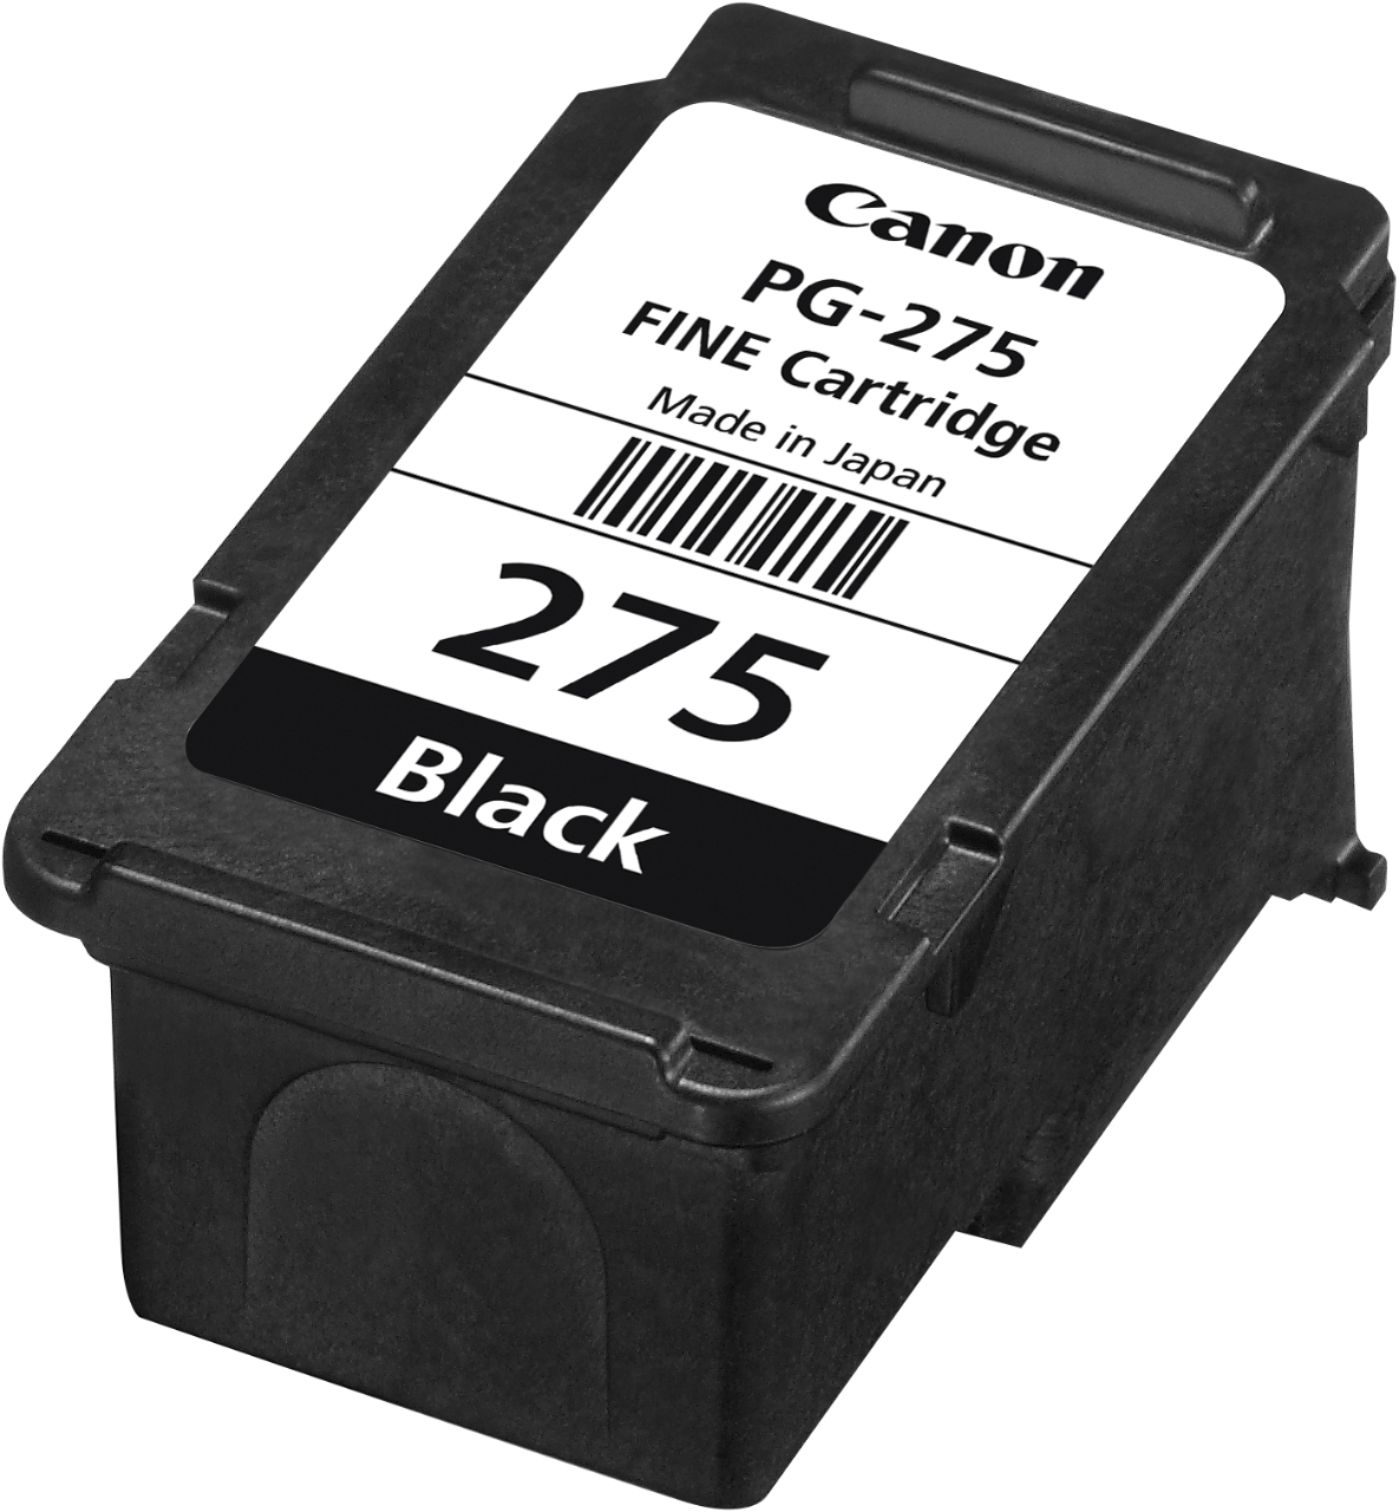 Canon PG-260 Black /CL-261 Color Value Pack Complete Set of Ink 